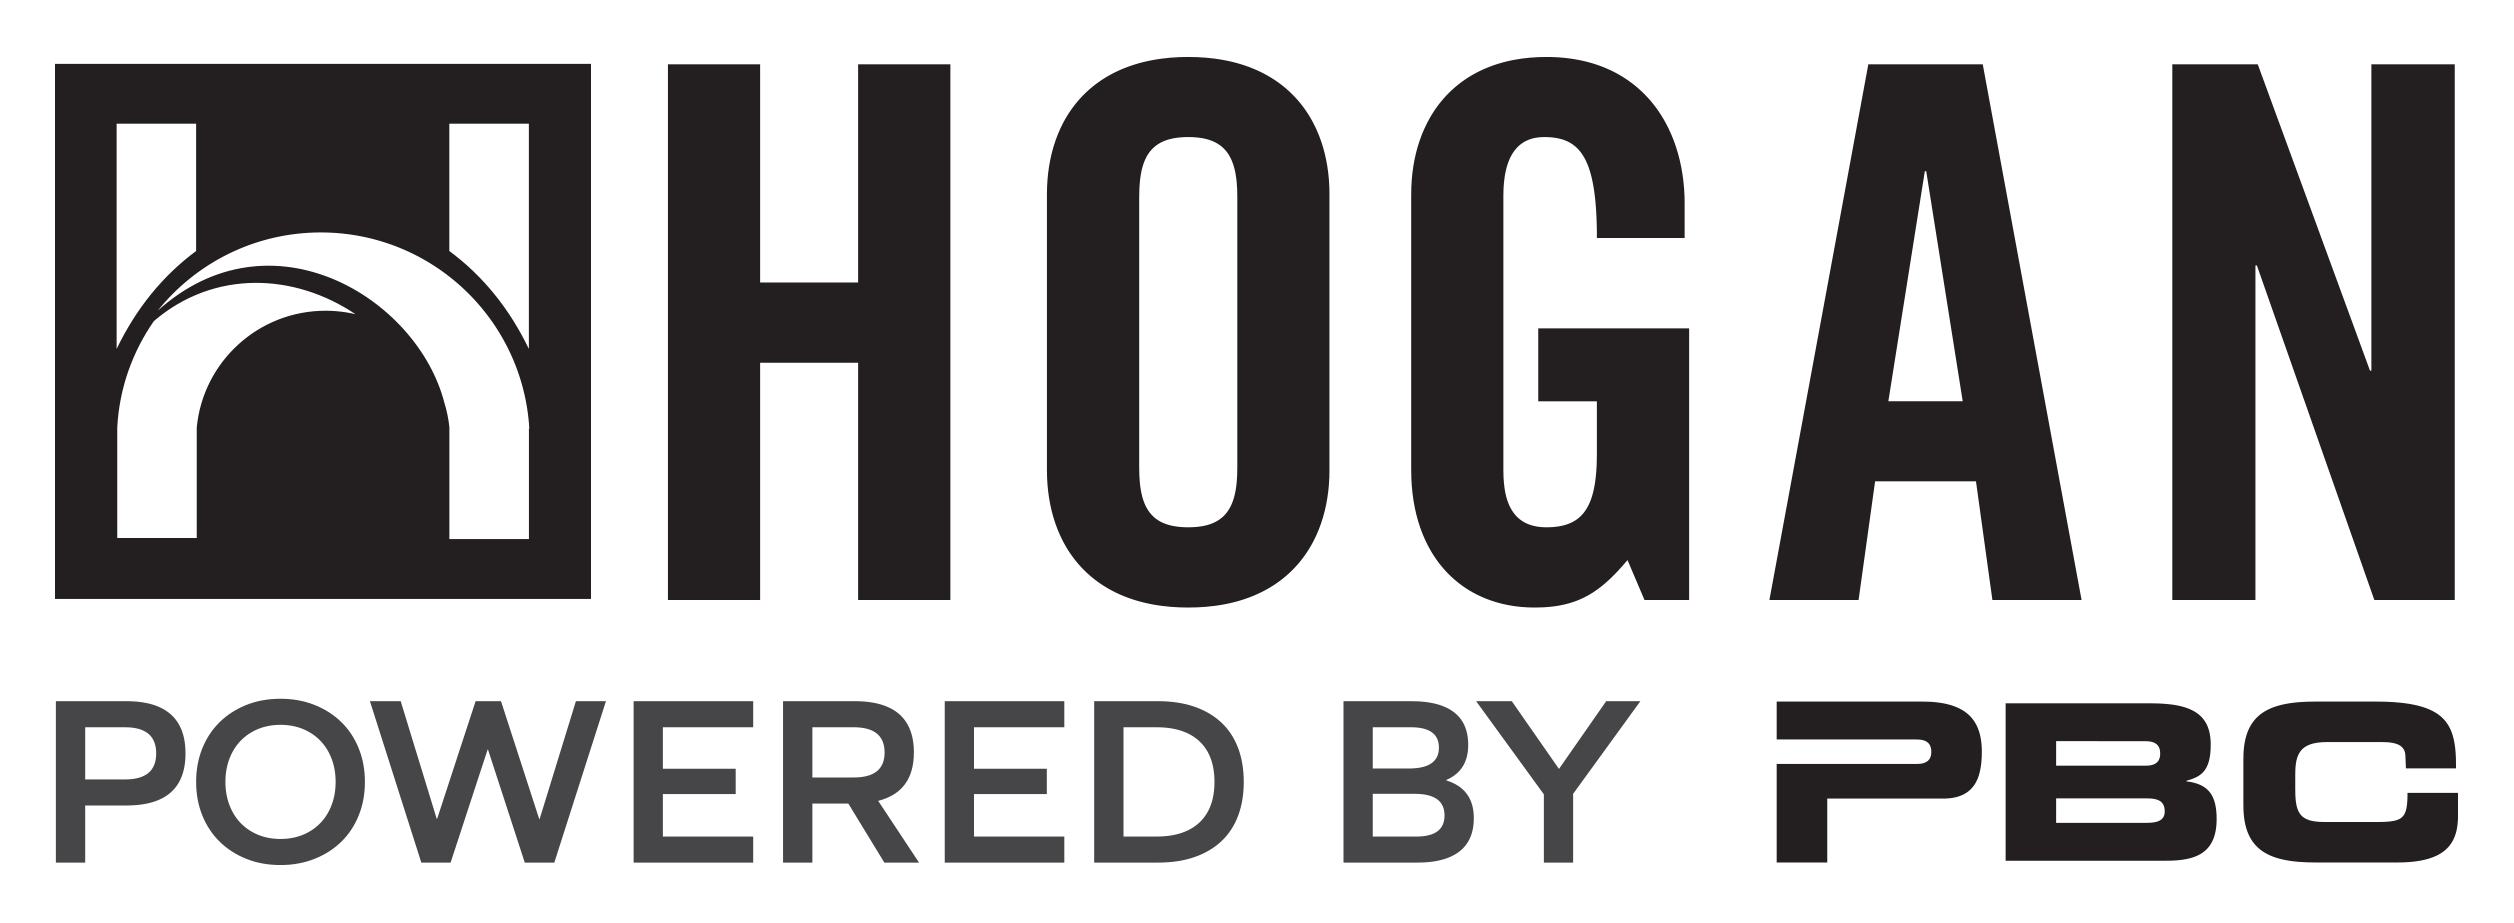 Hogan 360 Upload Template